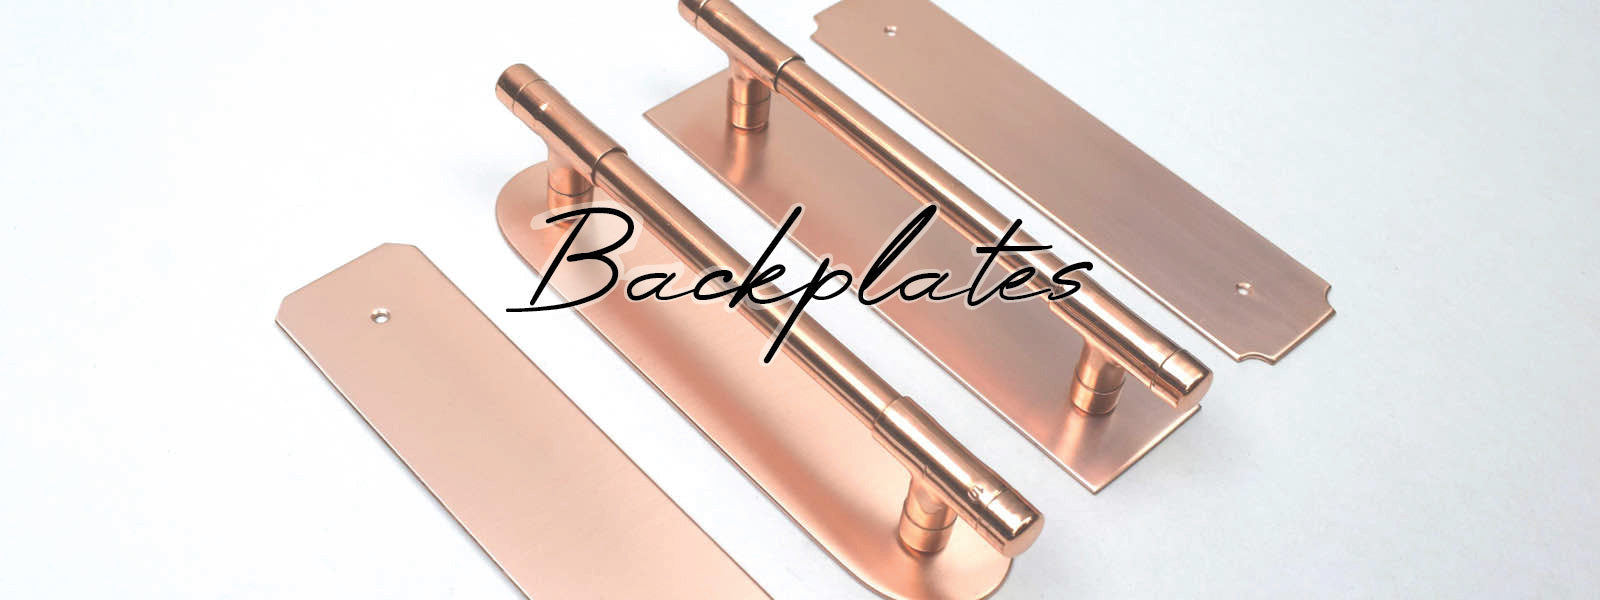 Copper Back Plates